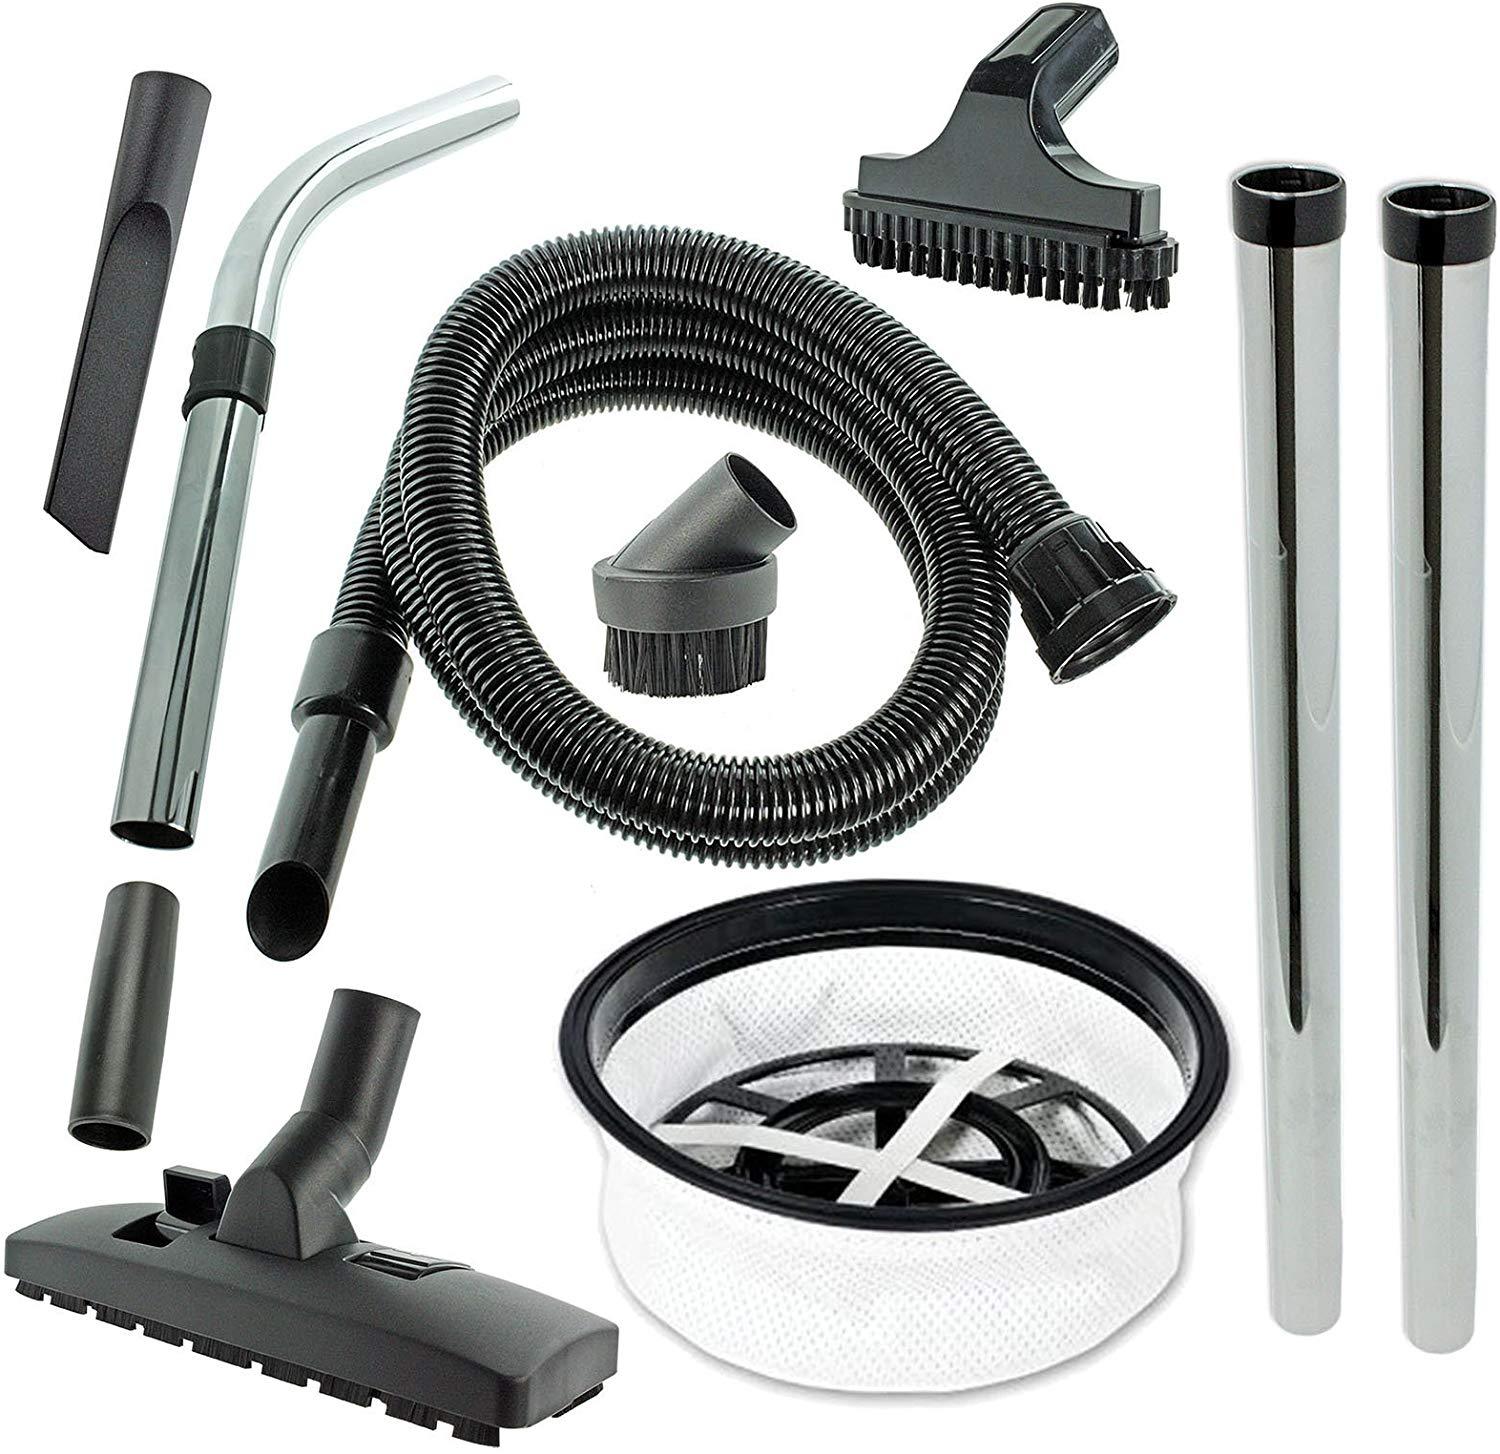 SPARES2GO Hose Filter & Spare Parts Tools Kit for Numatic Henry HVR200 HVR200T HVC200 Vacuum Cleaner Hoover (2.5m)